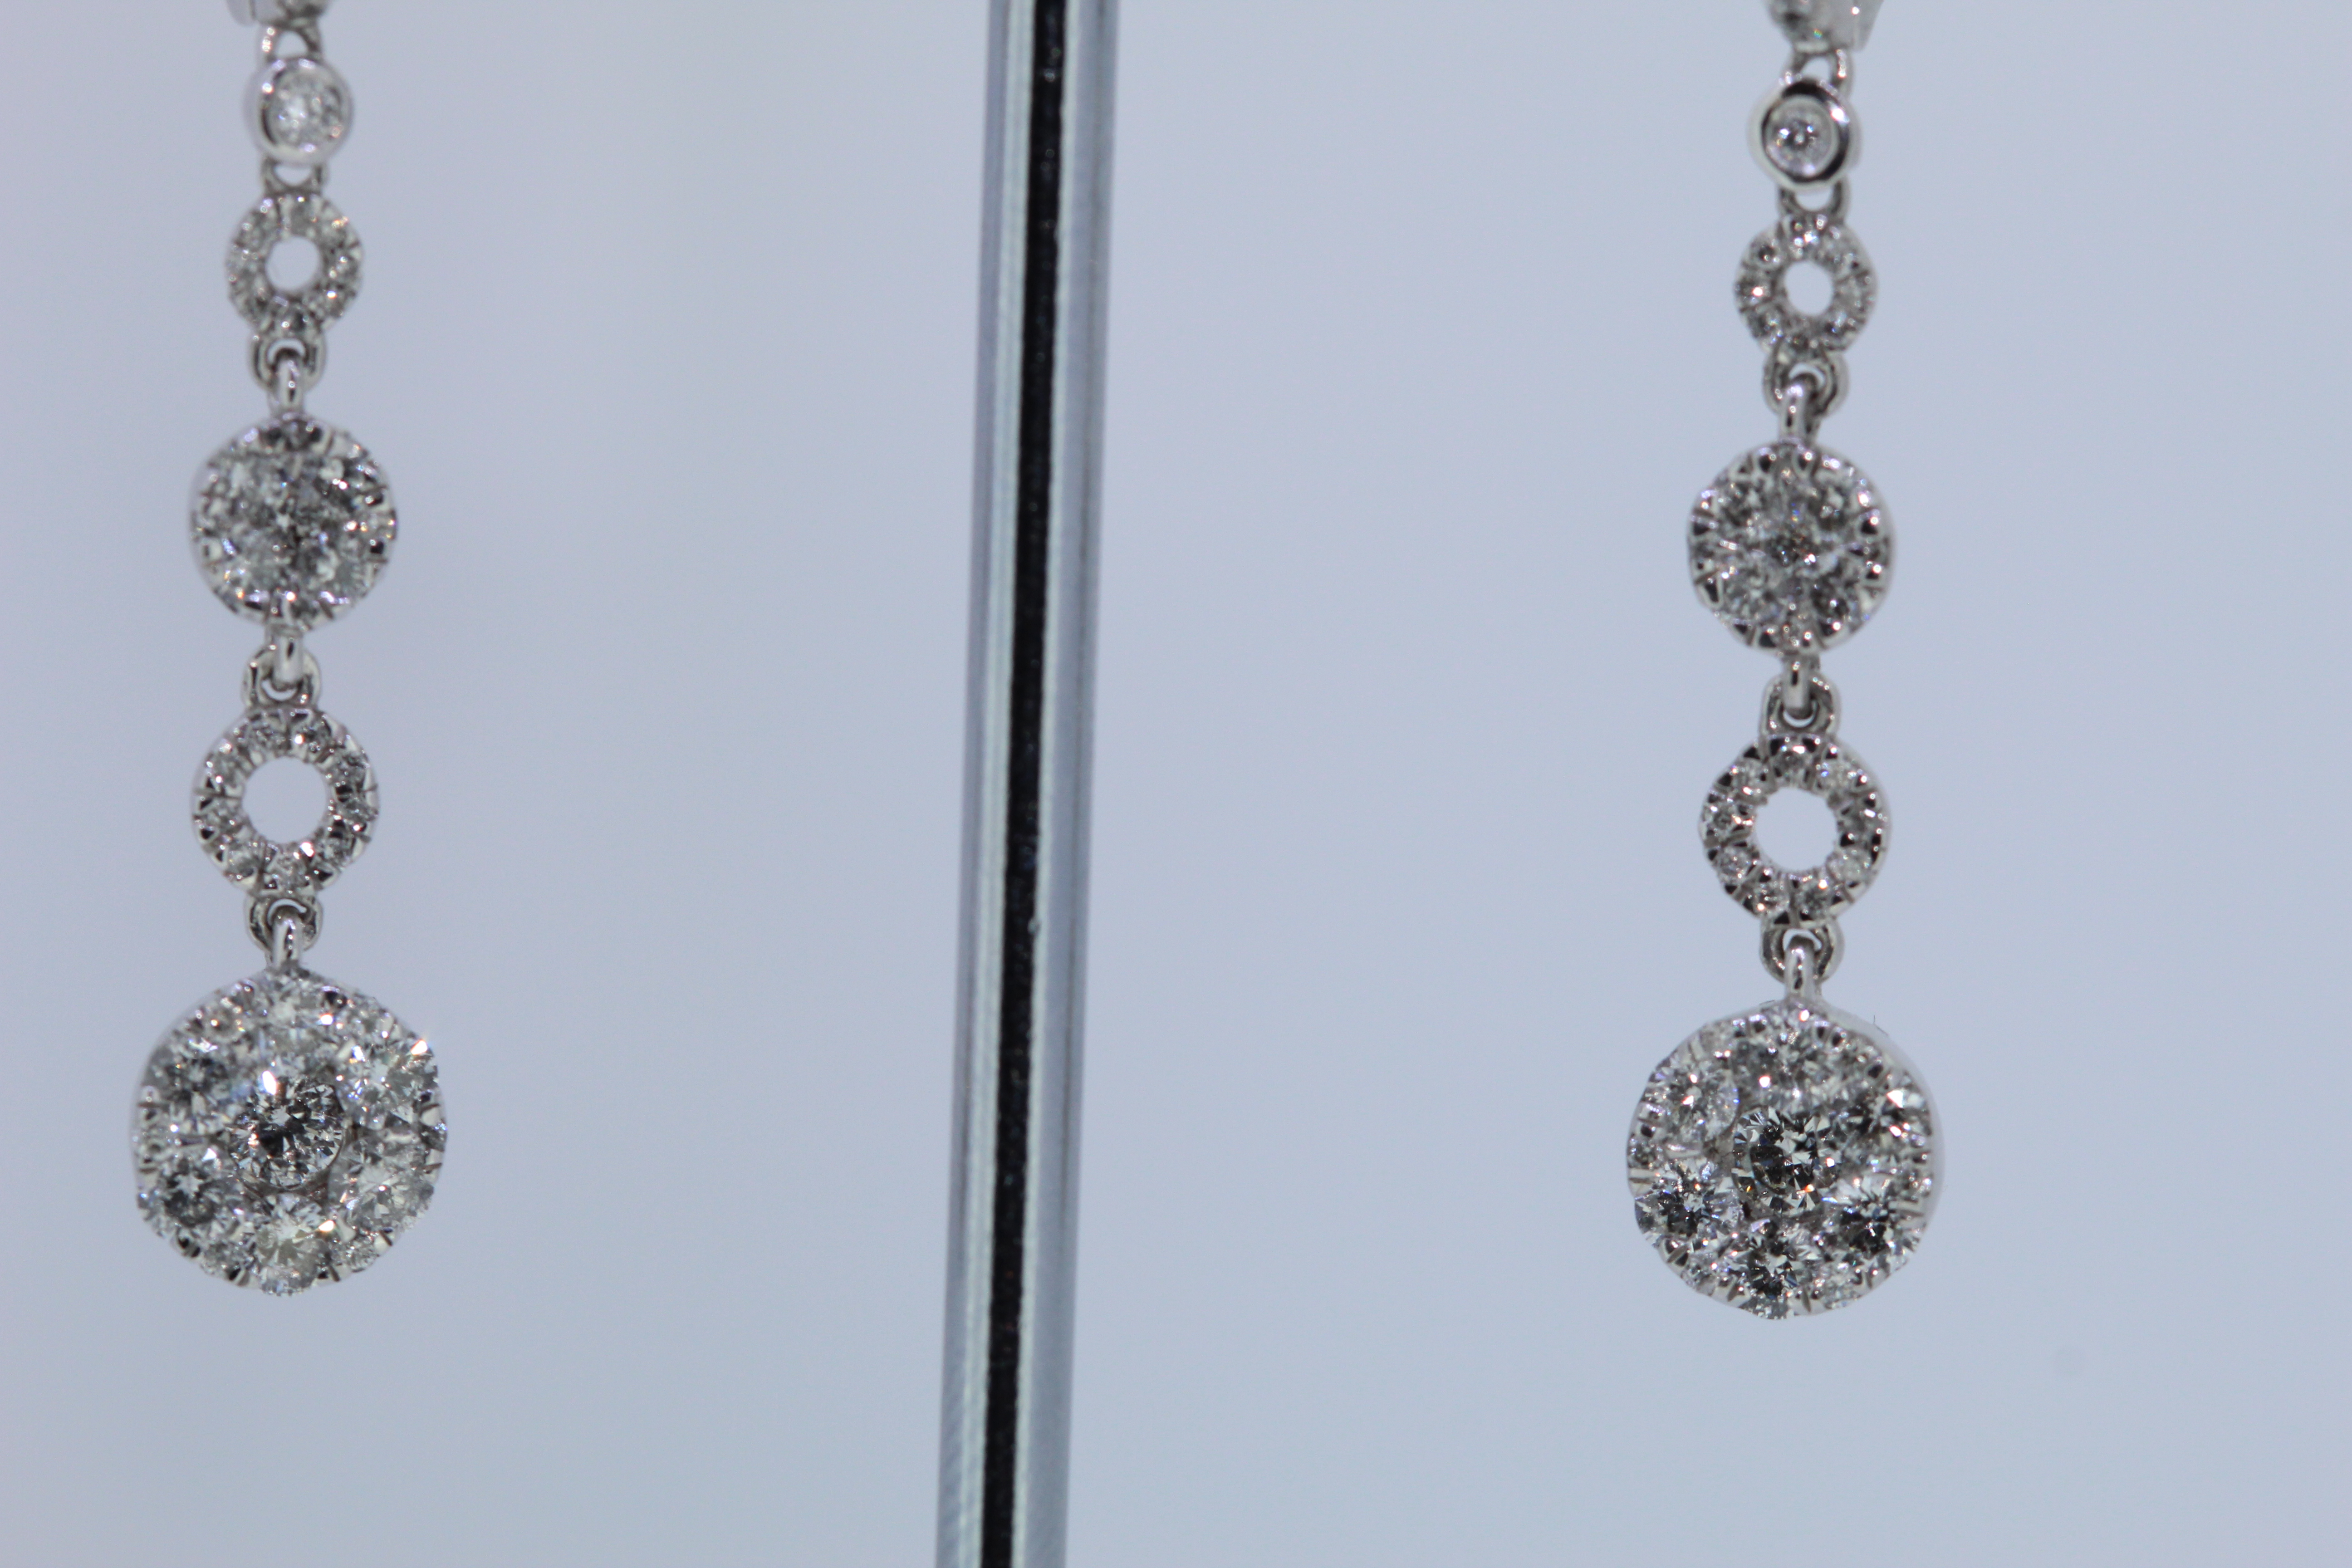 14ct Hallmark White Gold Diamond Set Drop Earrings - Image 3 of 3